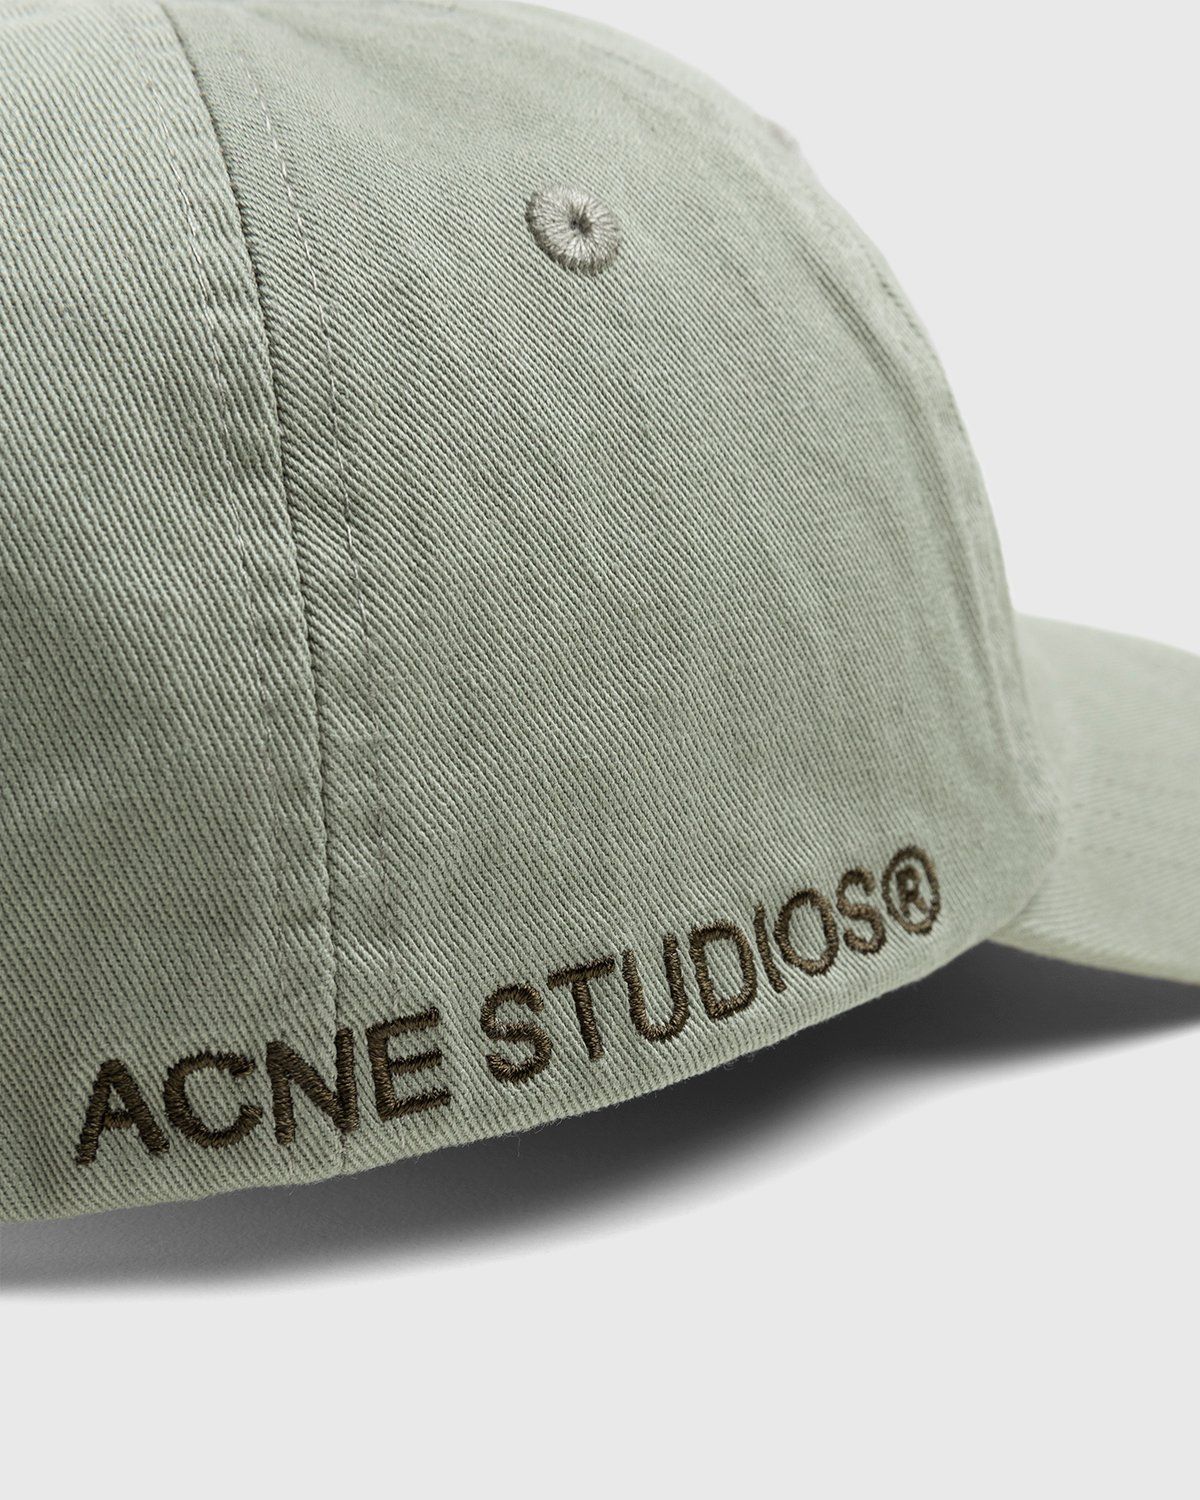 Acne Studios – Cotton Baseball Cap Sage Green - Image 5